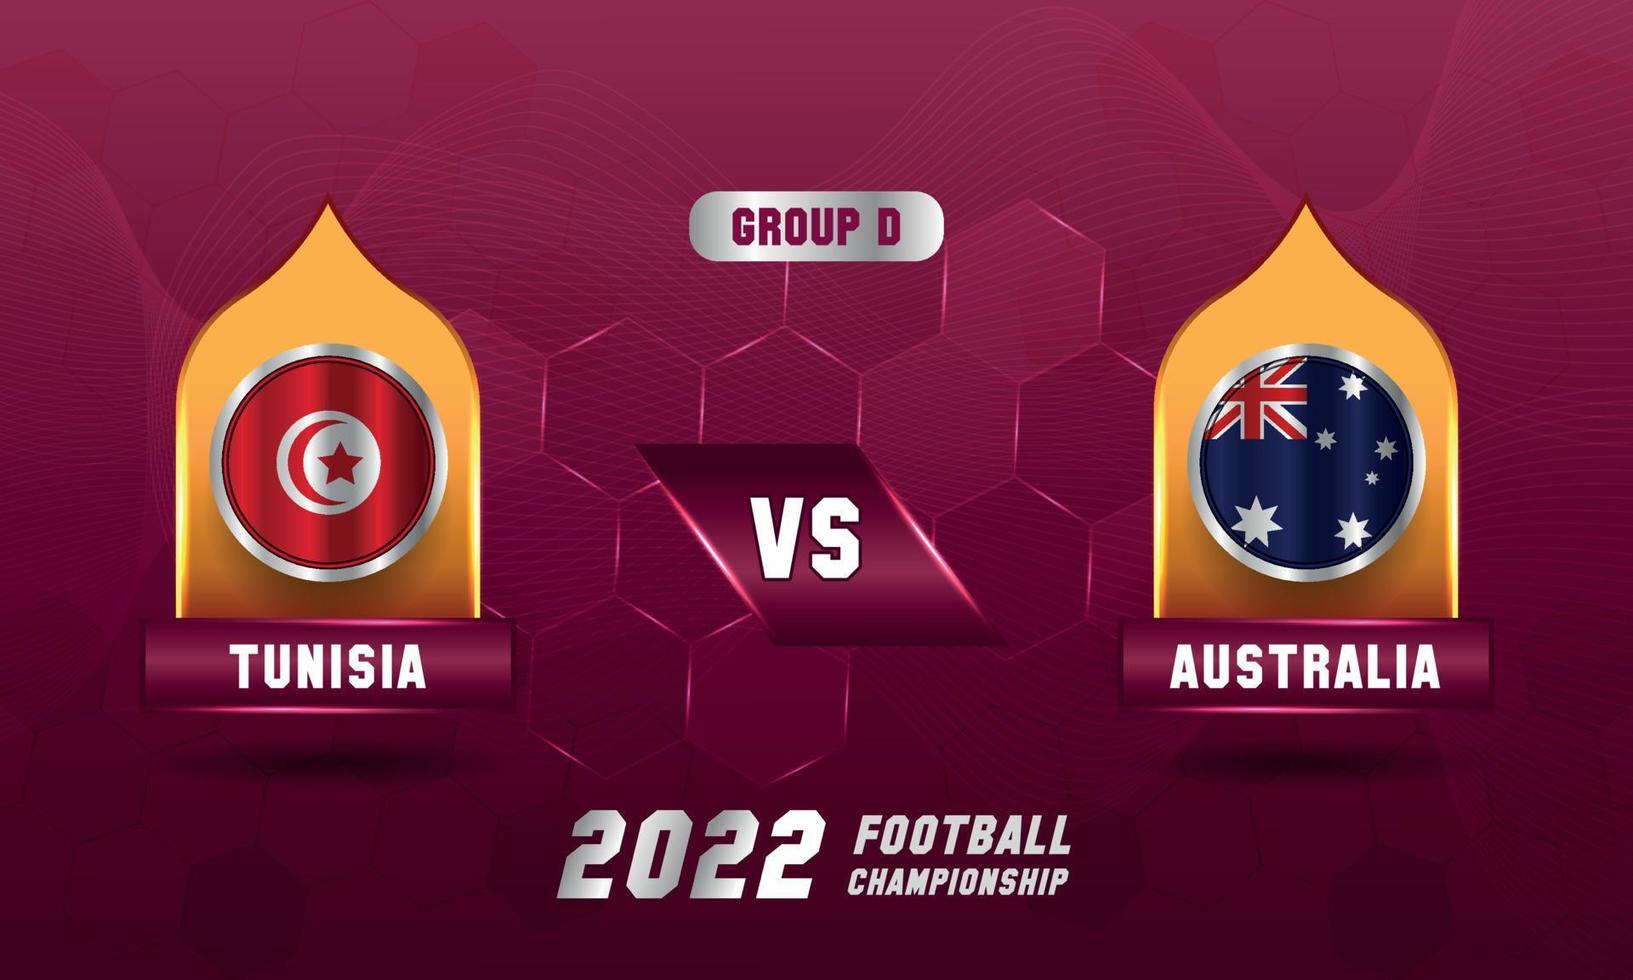 Qatar football world cup 2022 Tunisia vs Australia match vector